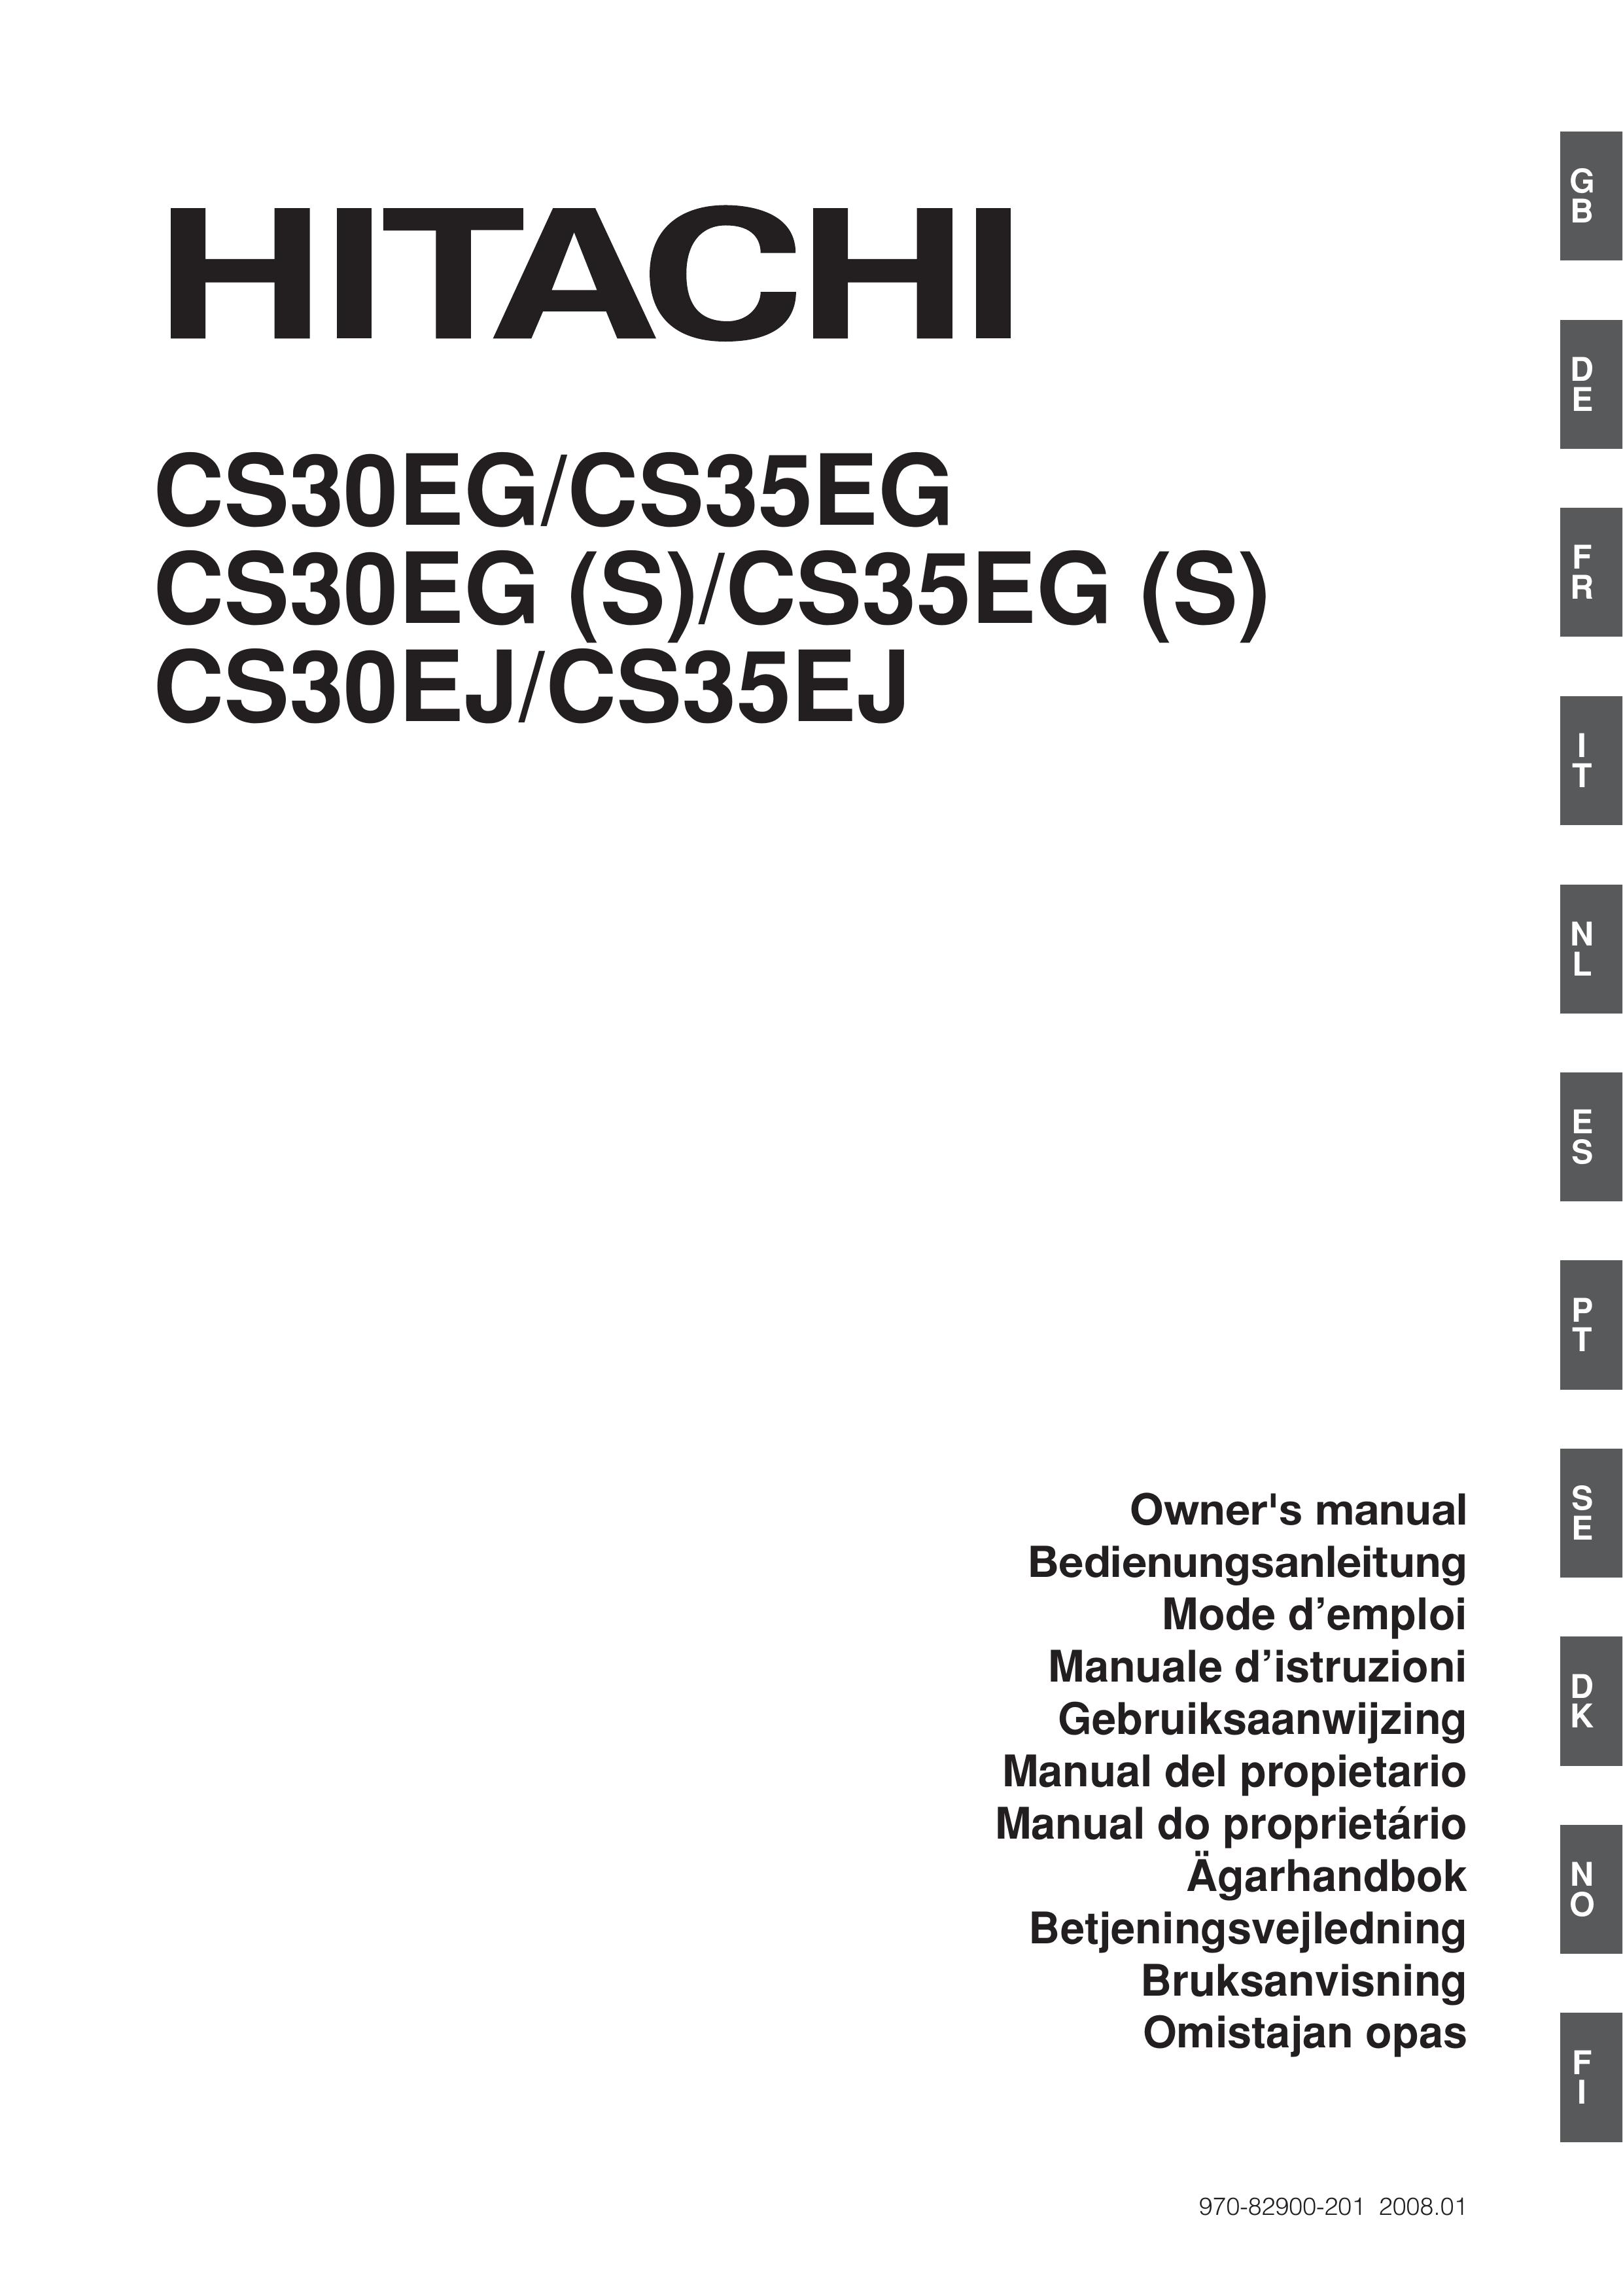 Hitachi CS35EG Chainsaw User Manual